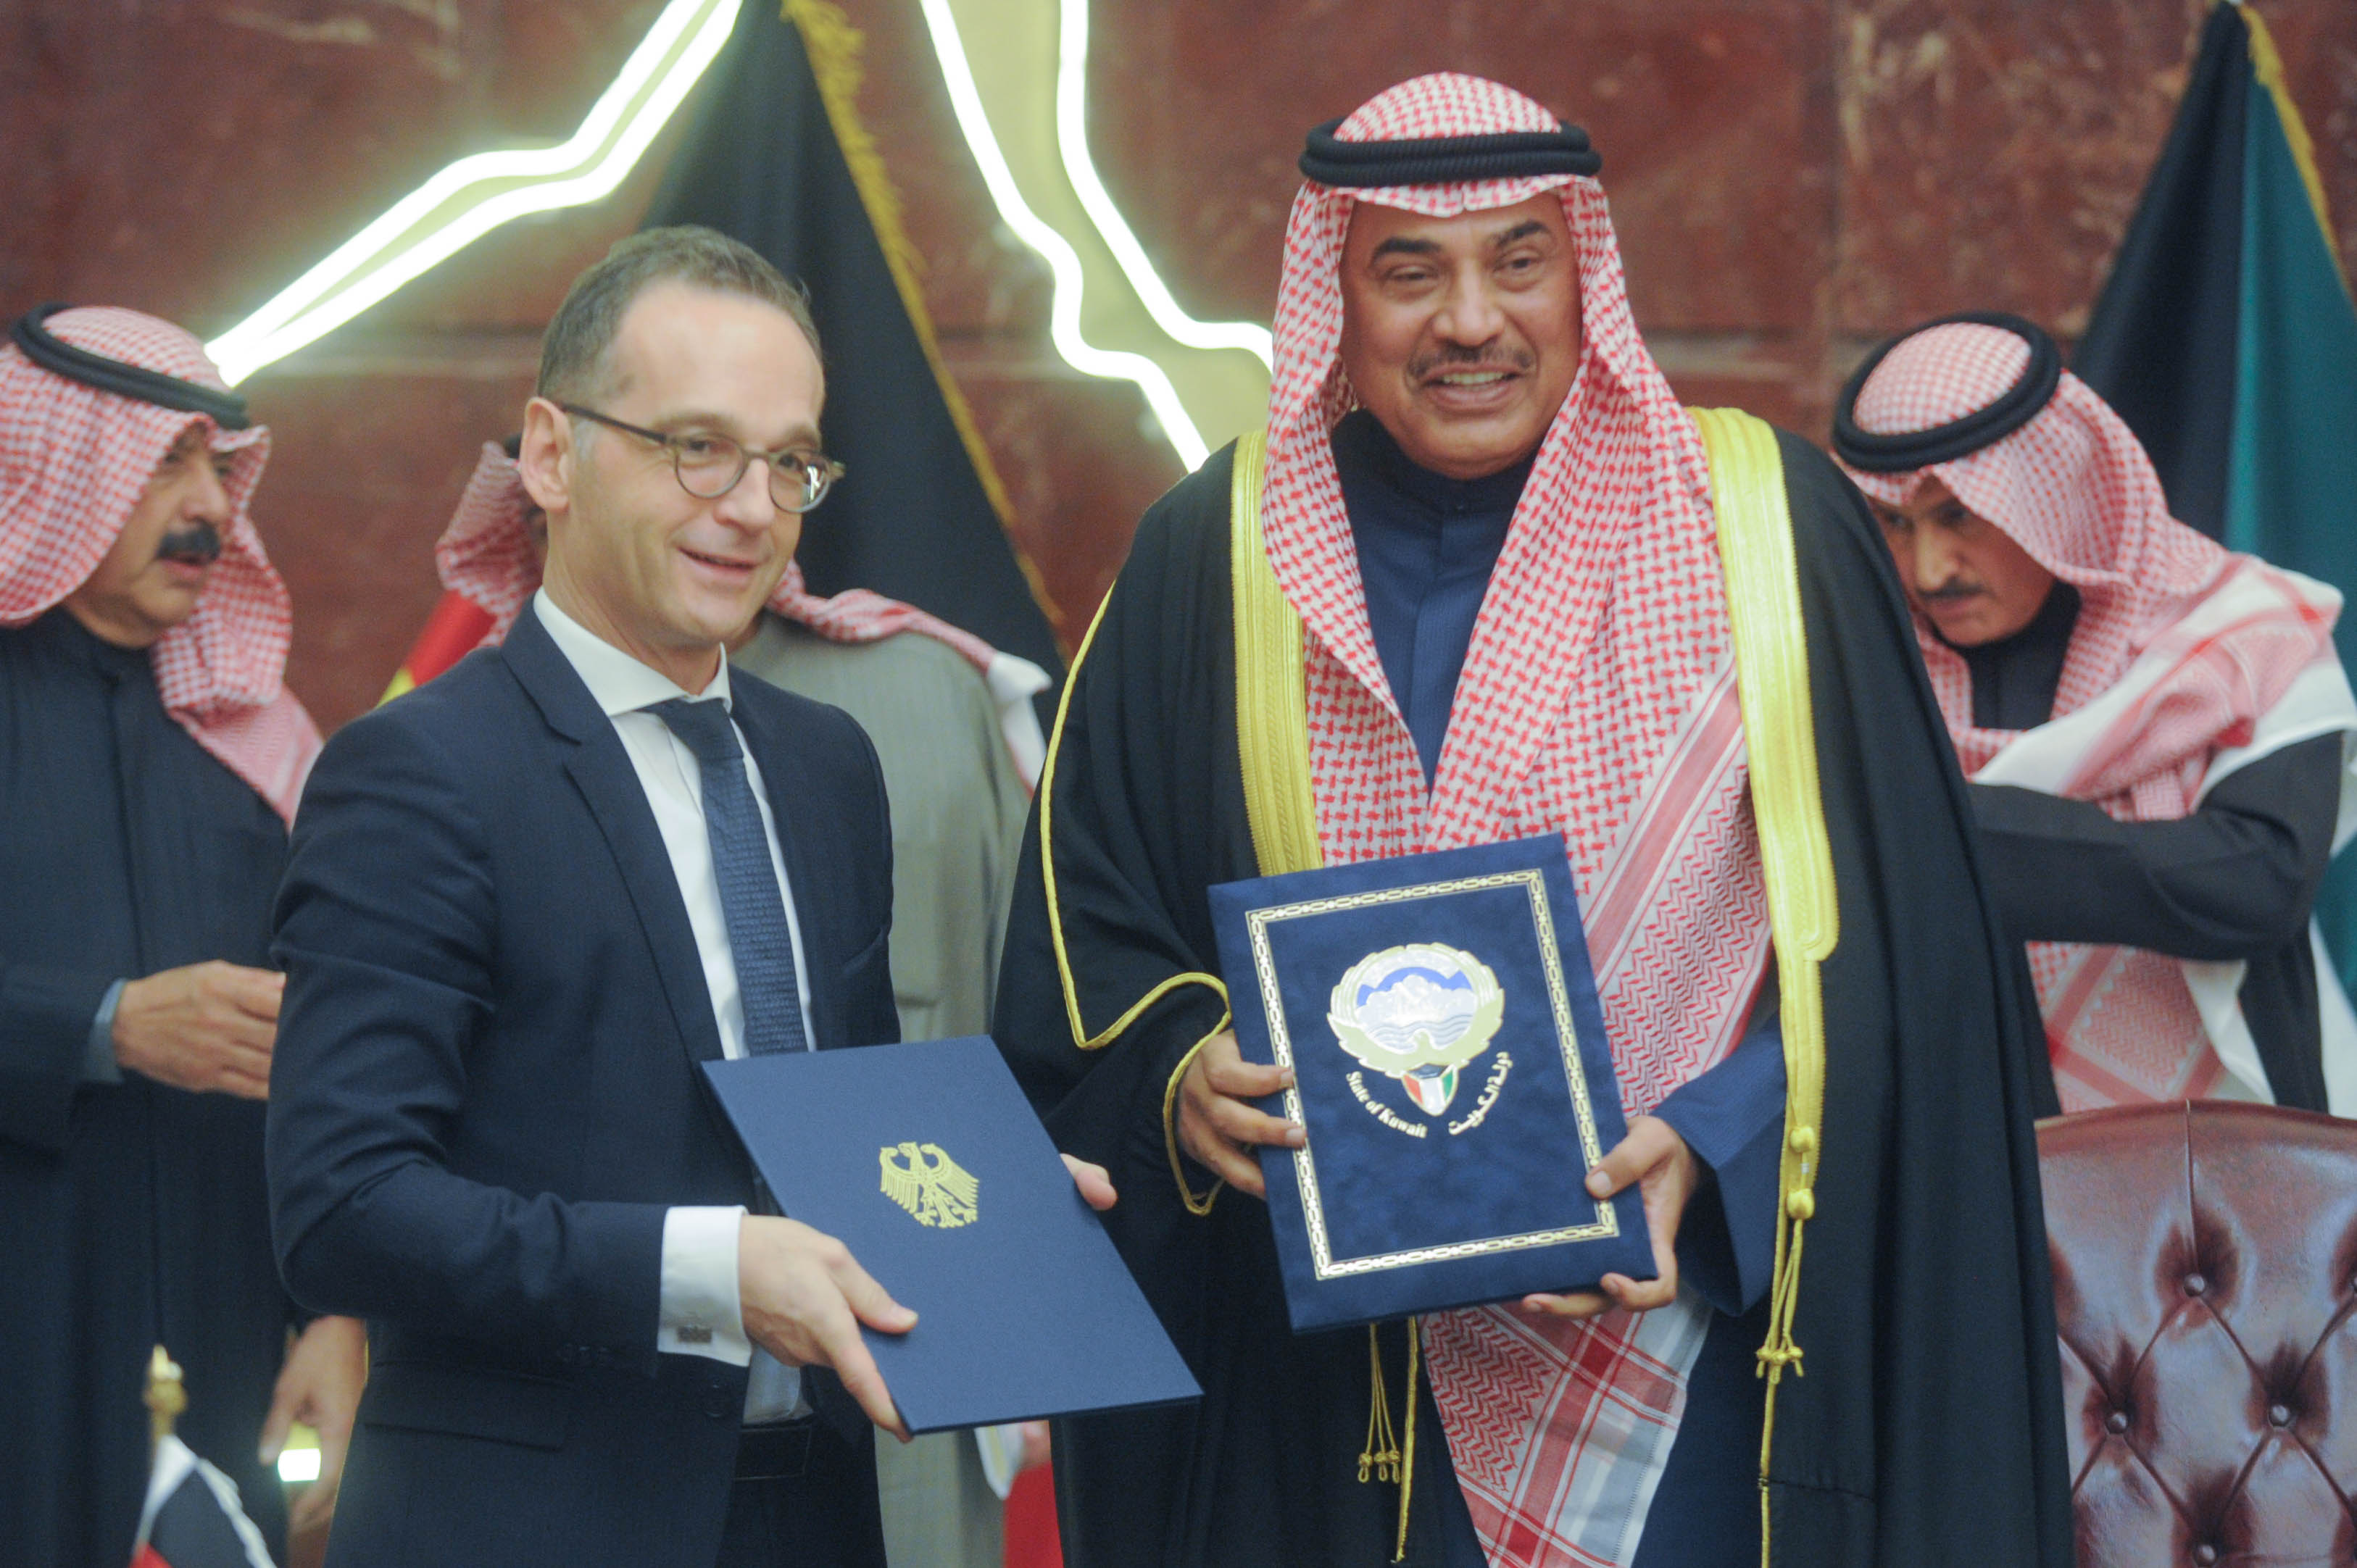 Kuwait Deputy Premier and Foreign Minister Sheikh Sabah Khaled Al-Hamad Al-Sabah with his German counterpart Heiko Maas